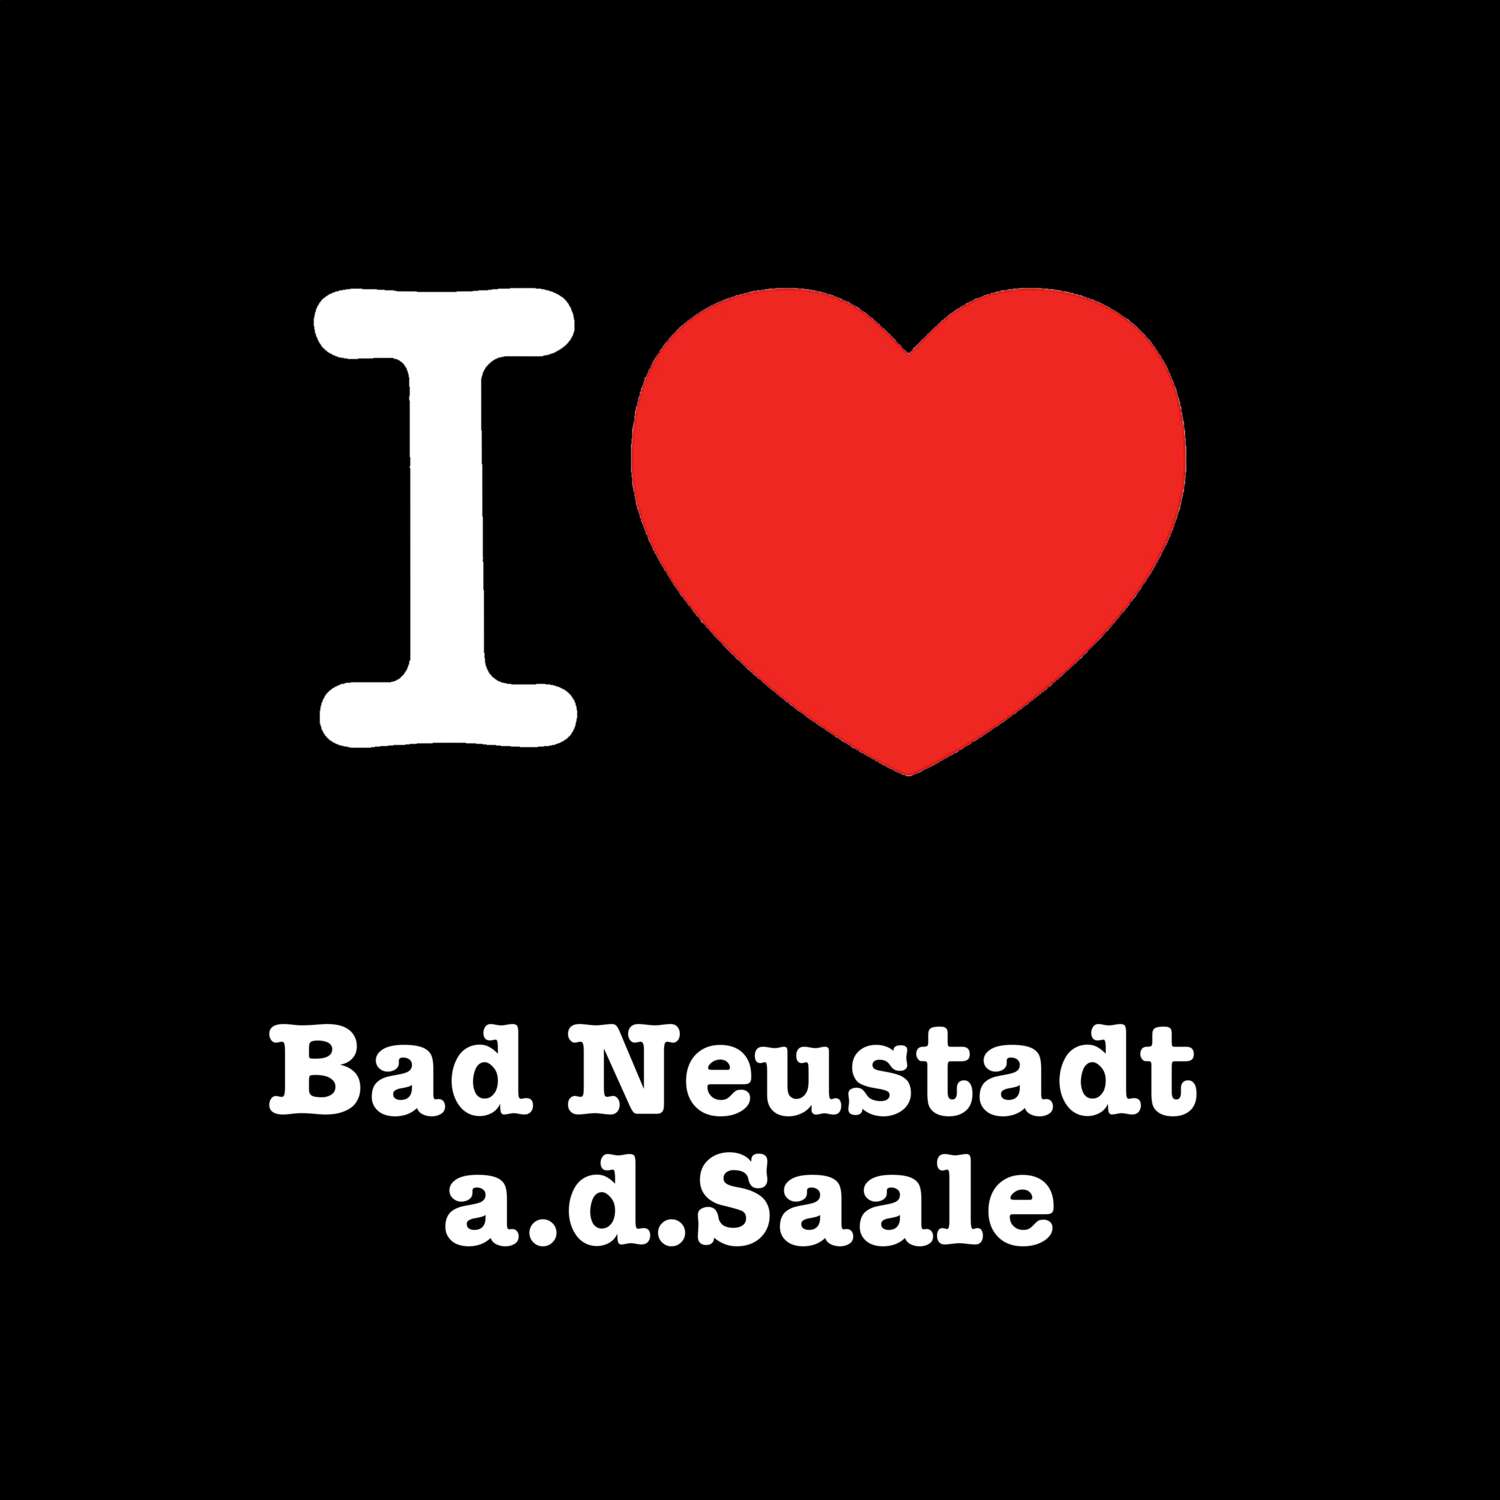 Bad Neustadt a.d.Saale T-Shirt »I love«